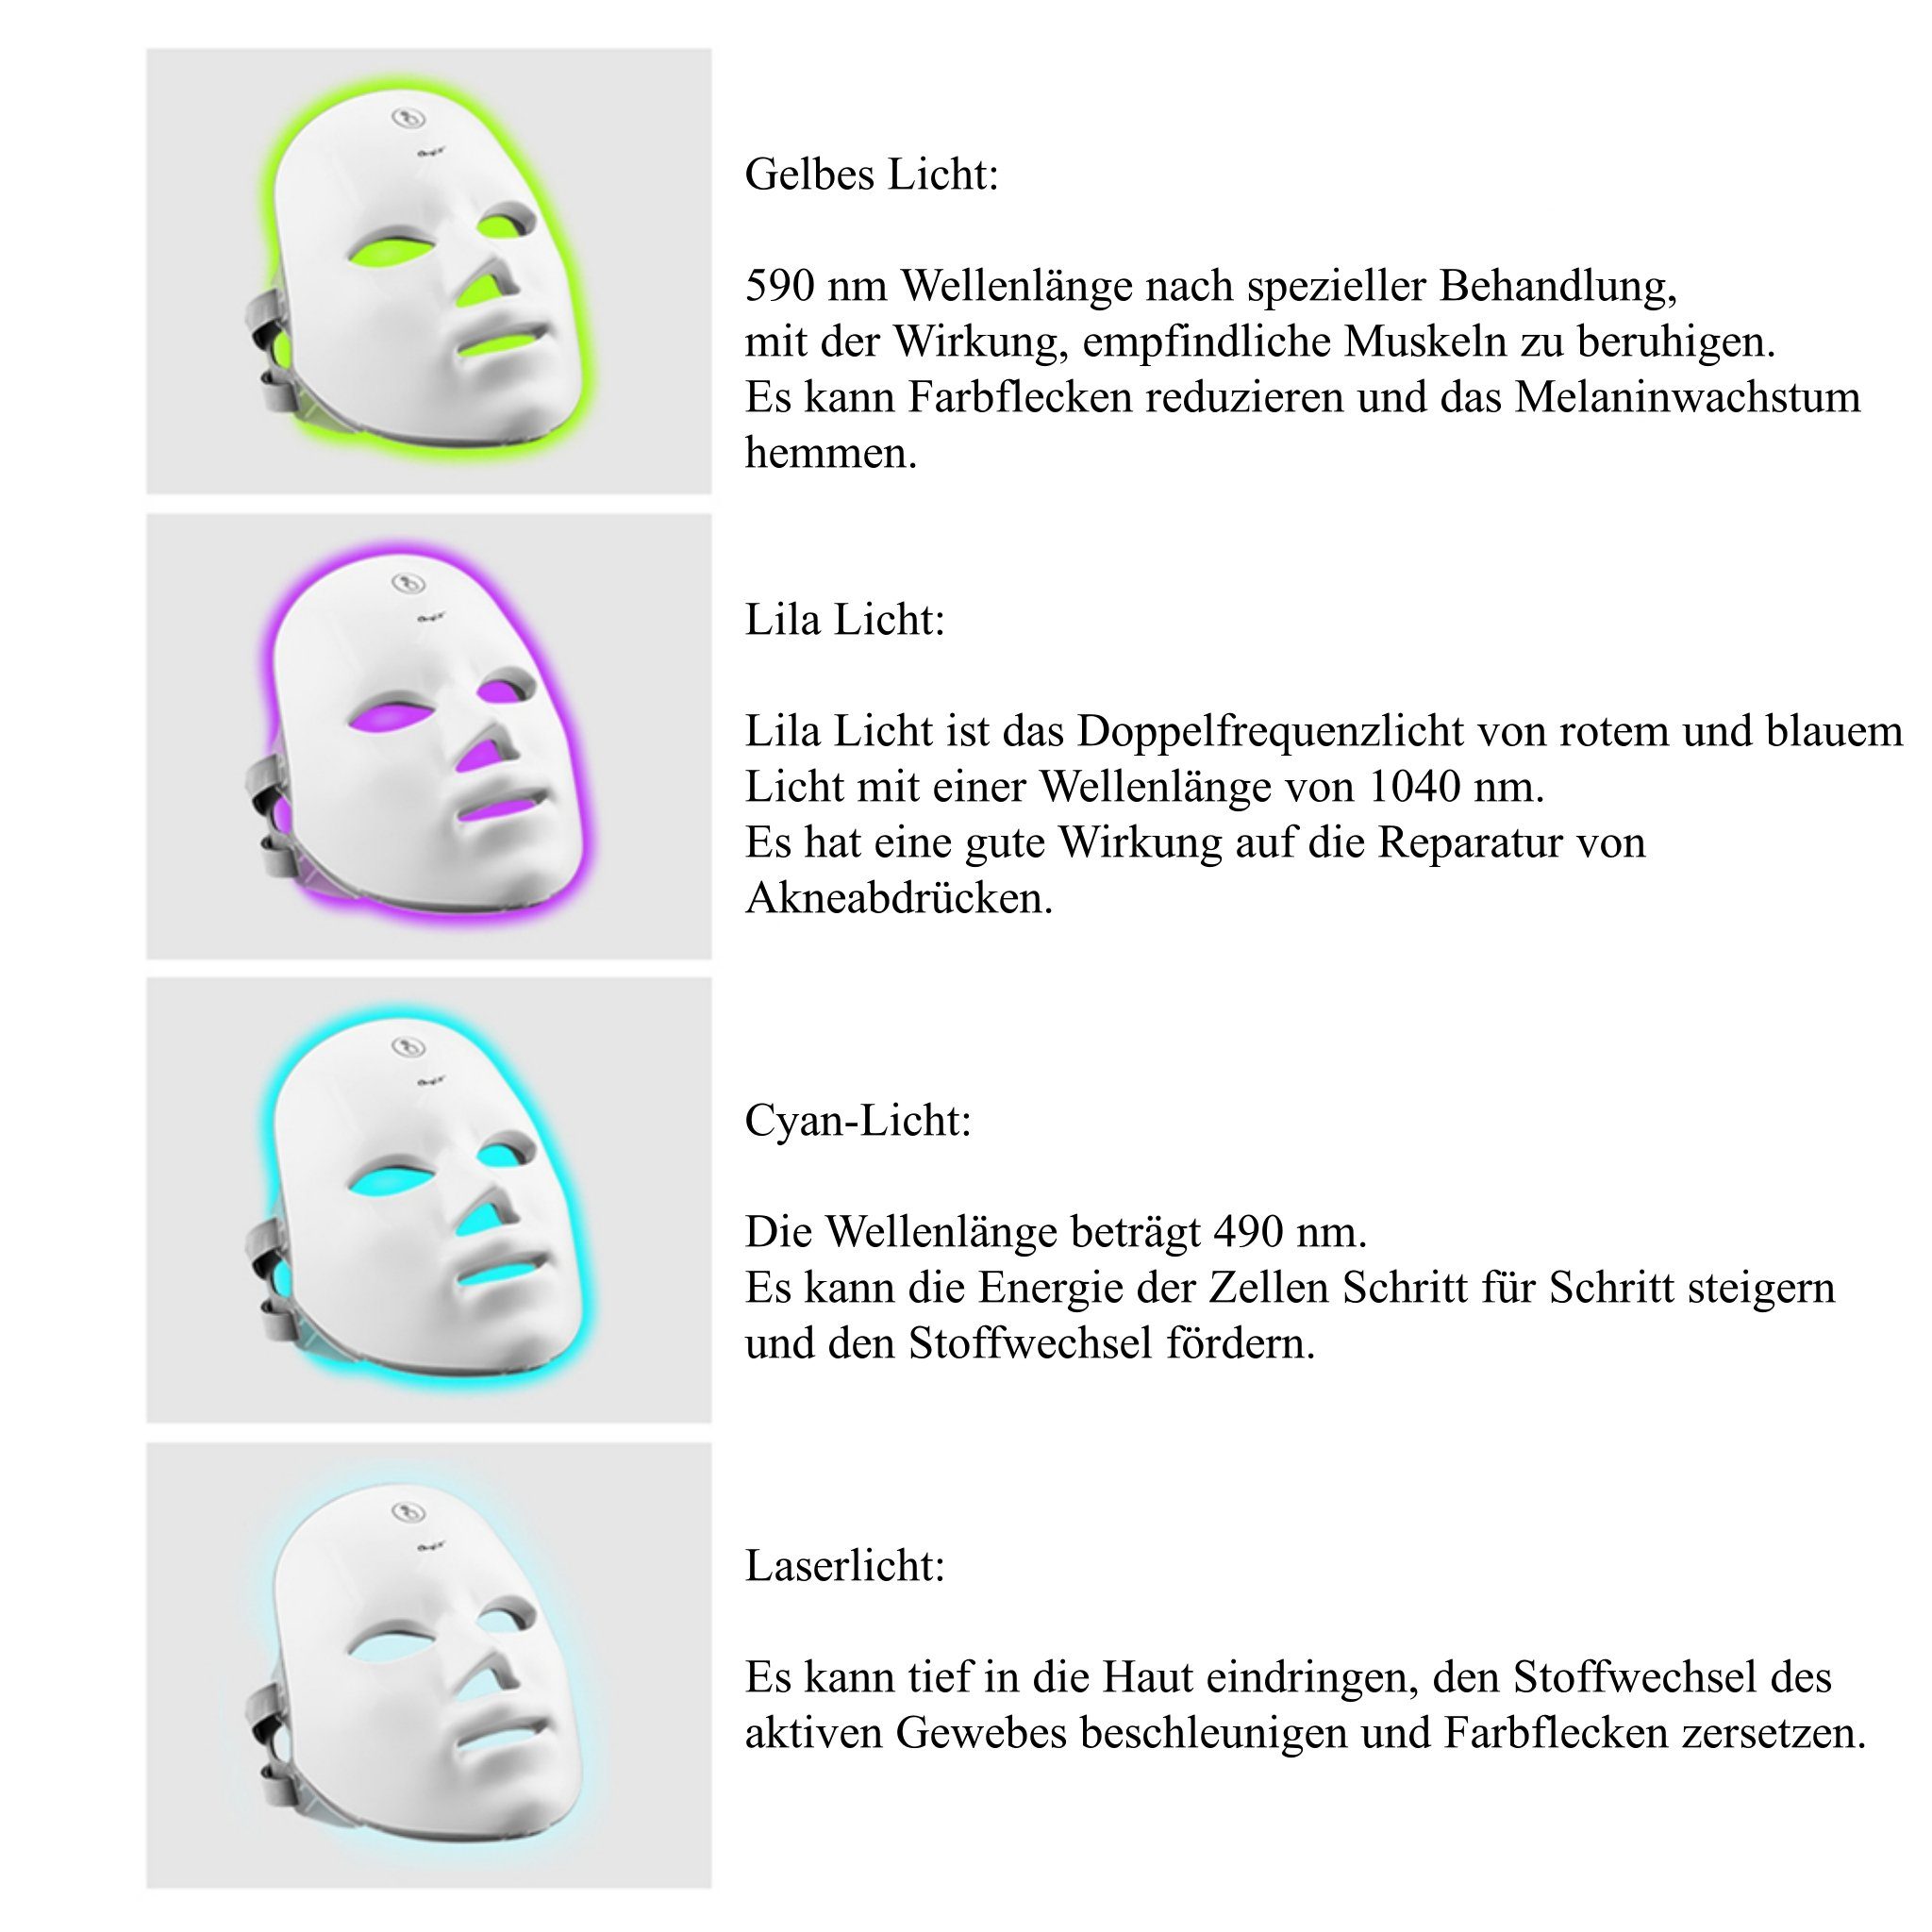 CkeyiN 7-Farben-LED-Gesichtsmaske Hautstraffung, Faltenstraffung Gesichtsmaske Anti-Aging, Rechargebale,